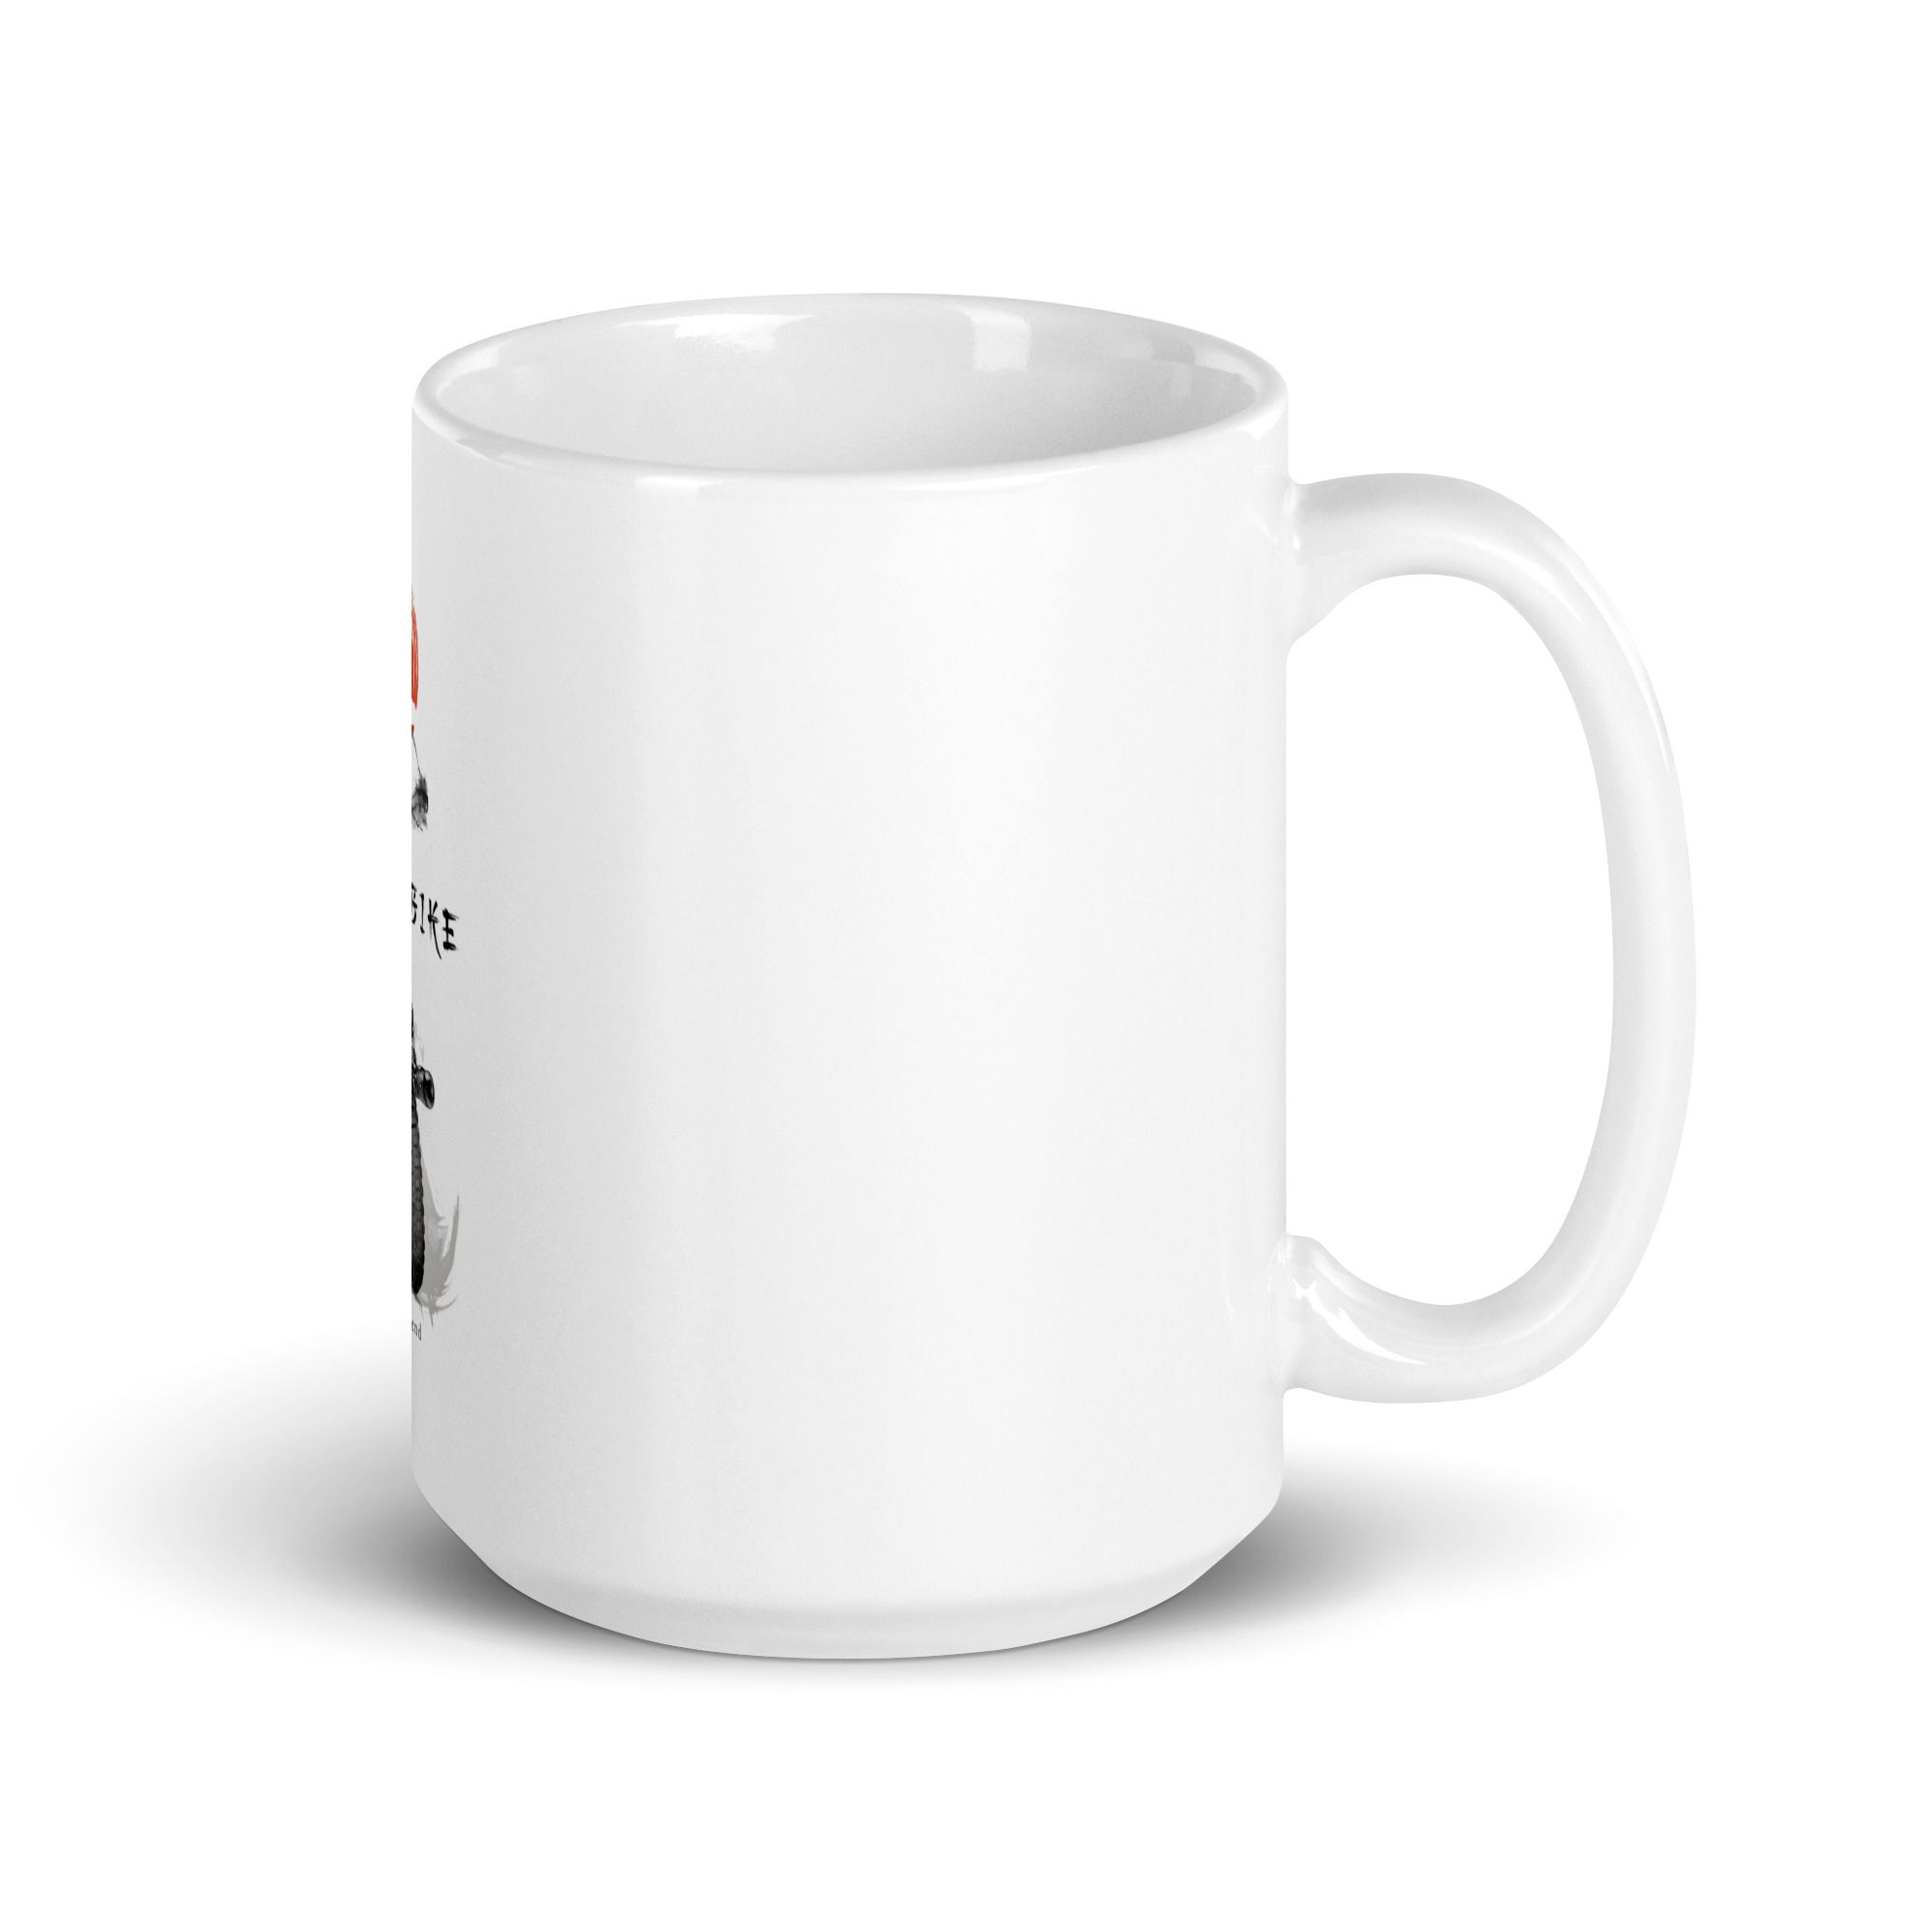 white-glossy-mug-white-15-oz-handle-on-right-6543e4300143f.jpg